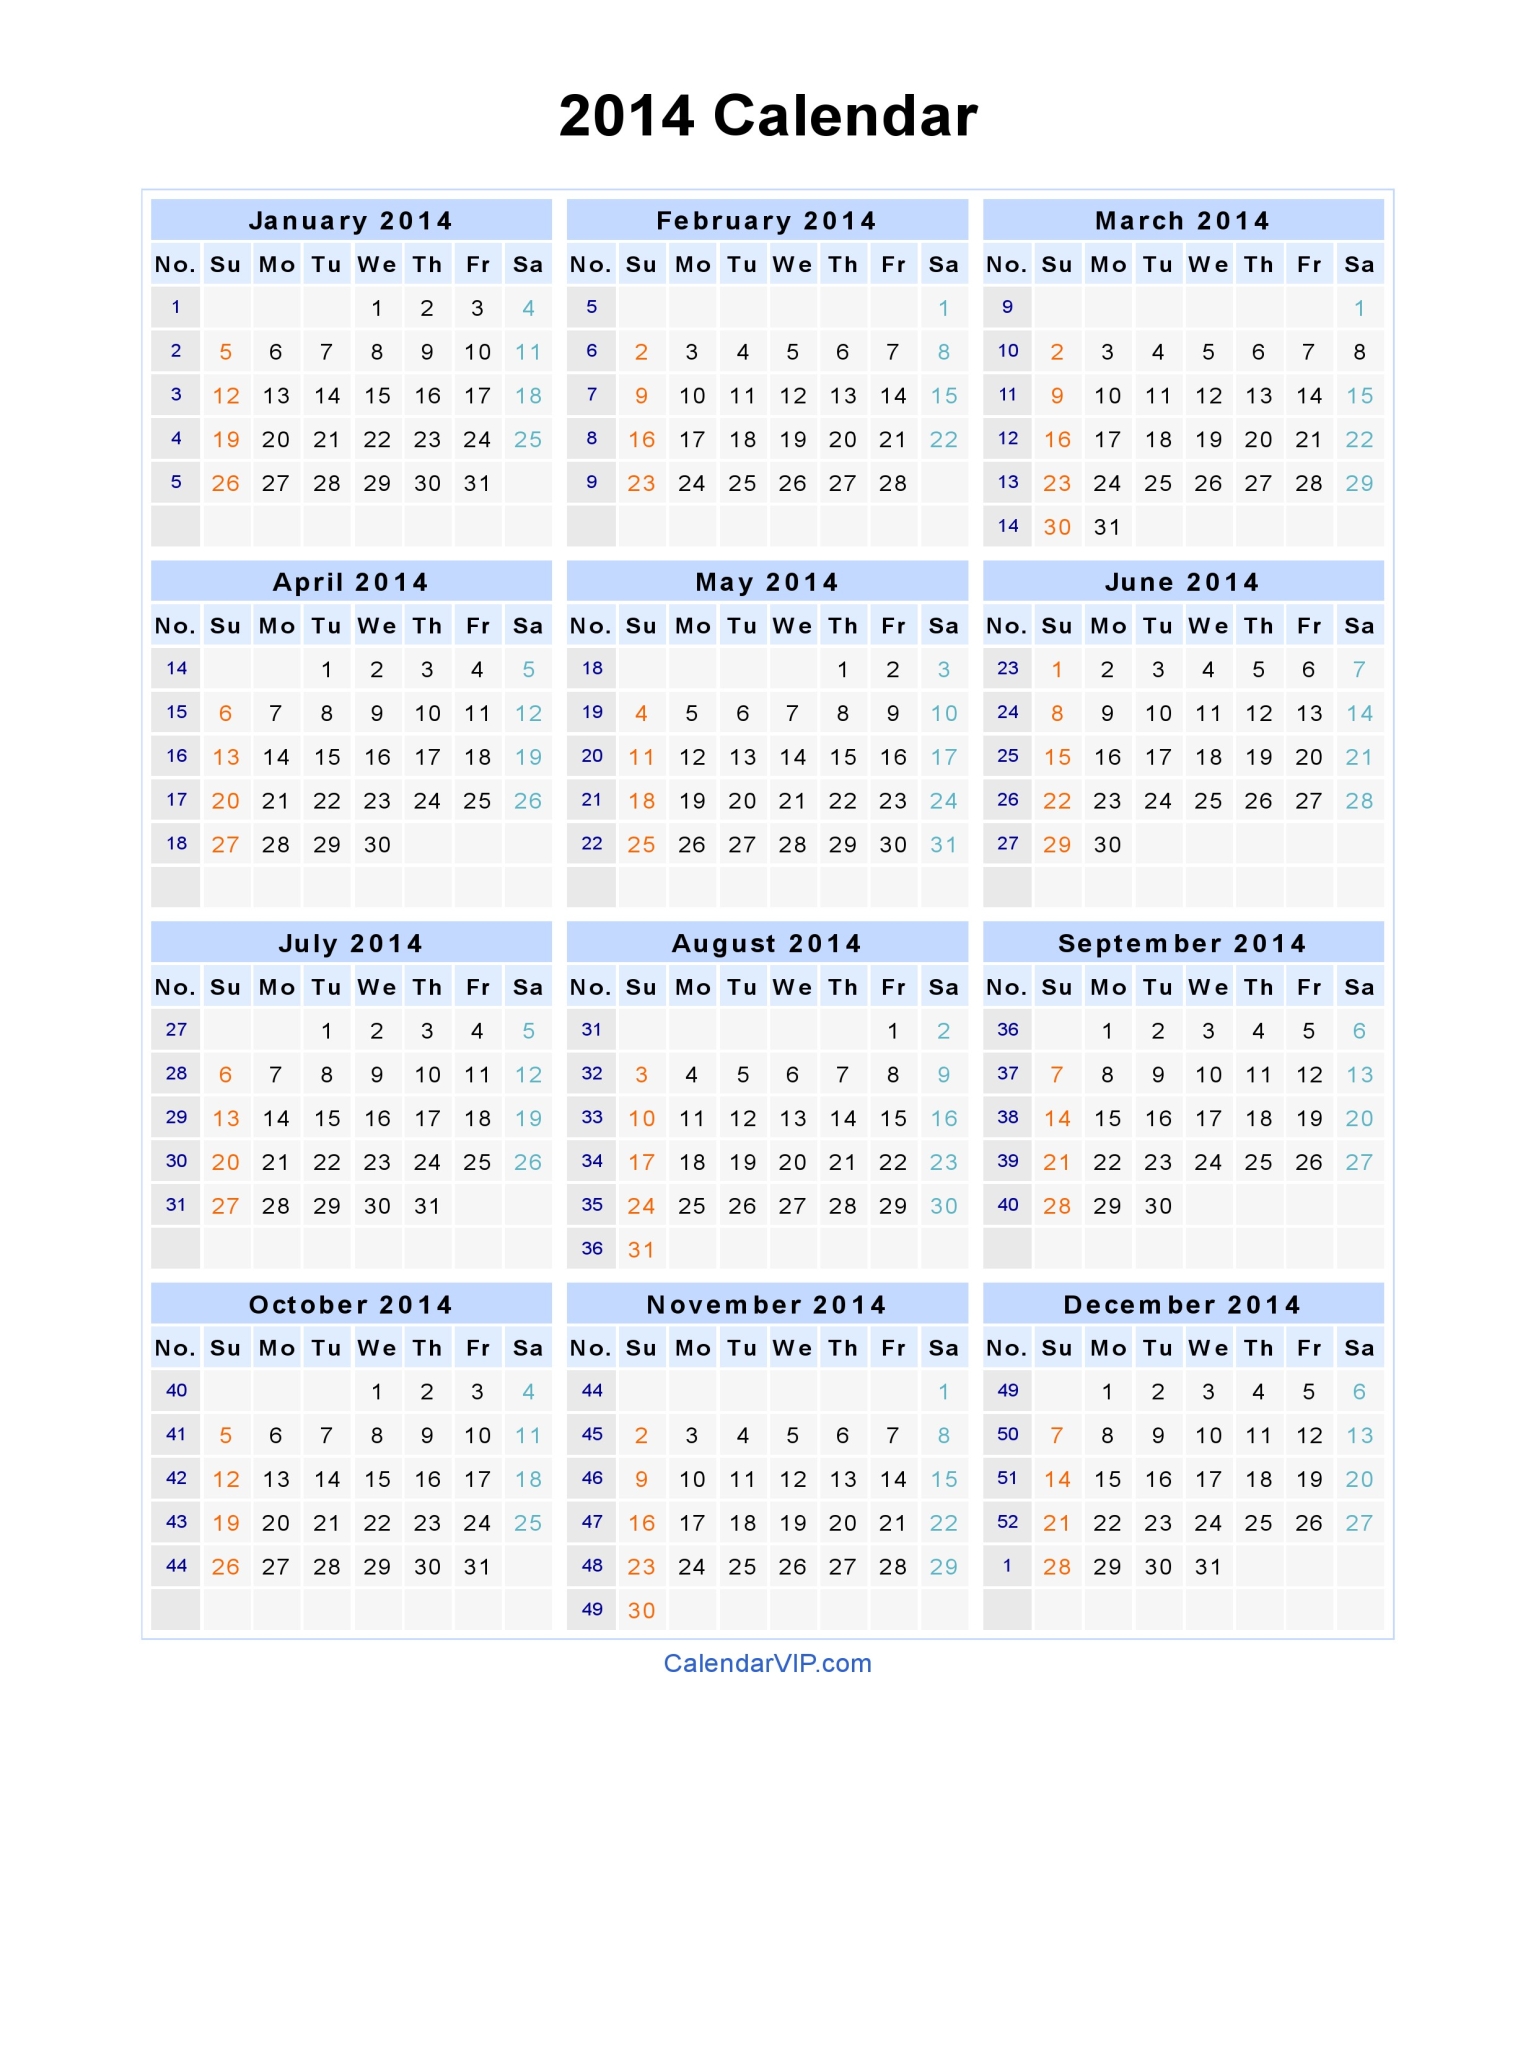 2014 Calendar - Blank Printable Calendar Template in PDF Word Excel1536 x 2048